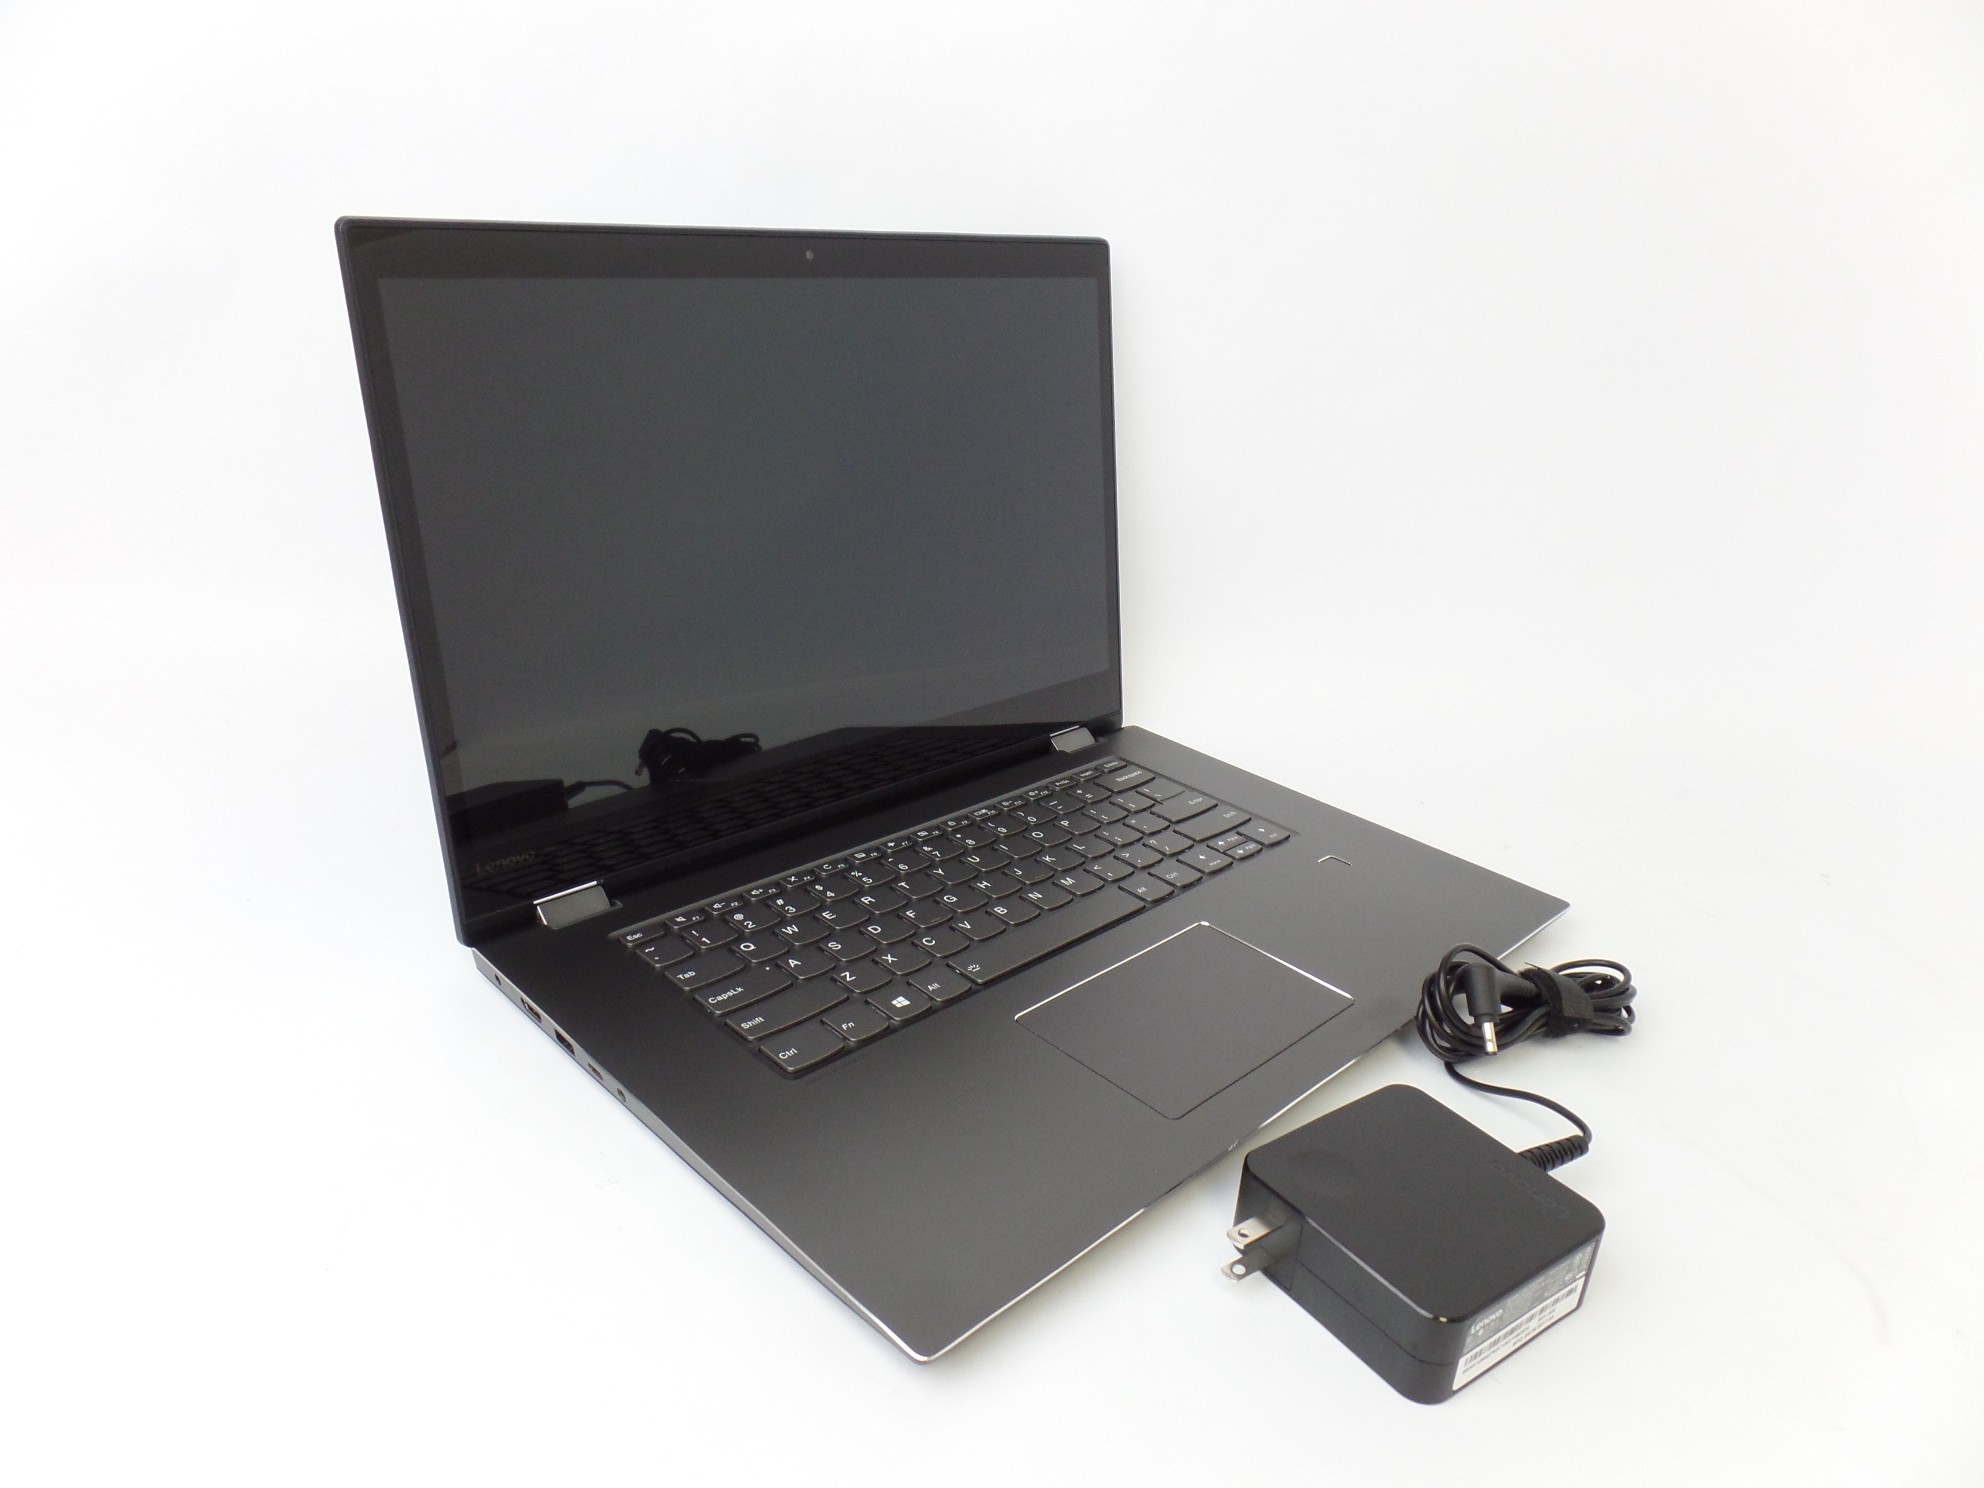 Lenovo Flex 5 1570 15.6" FHD IPS Touch Screen i5-7200U 8GB 256GB W10 2in1 Laptop